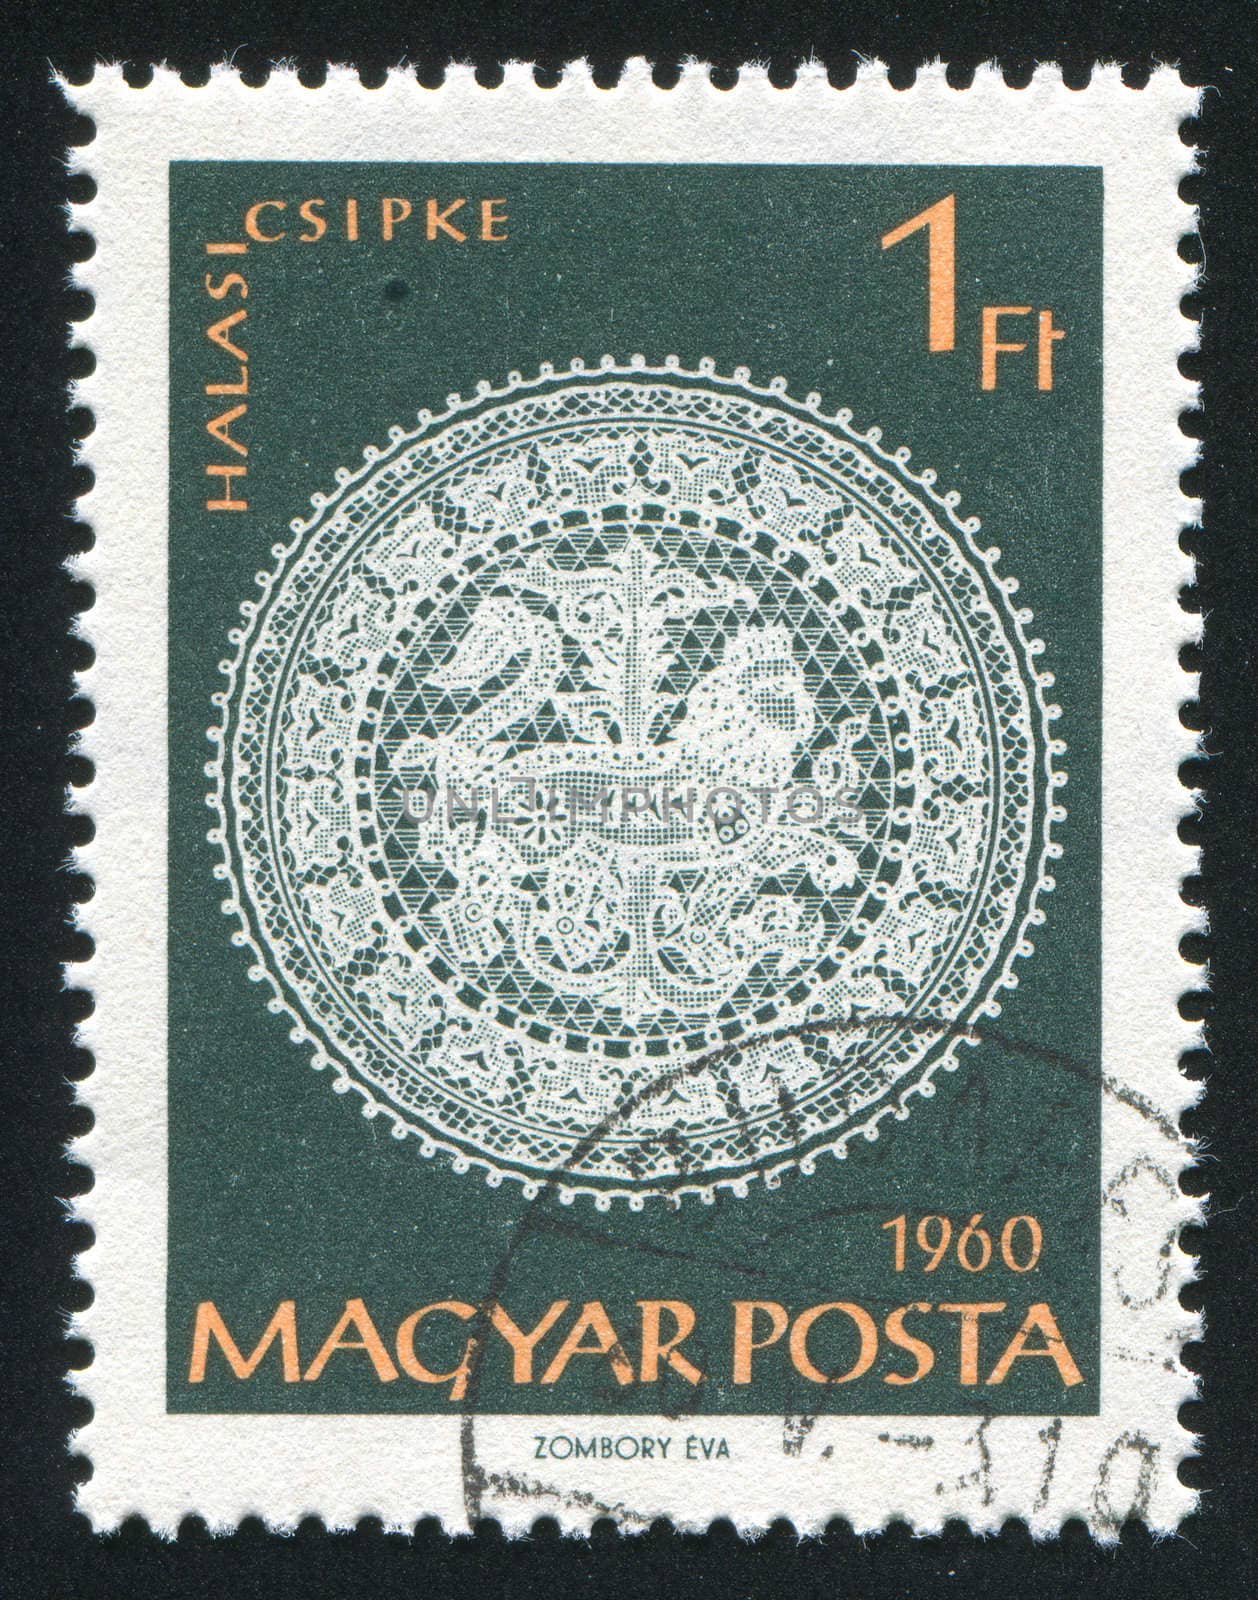 HUNGARY - CIRCA 1960: stamp printed by Hungary, shows Halas lace patterns, circa 1960